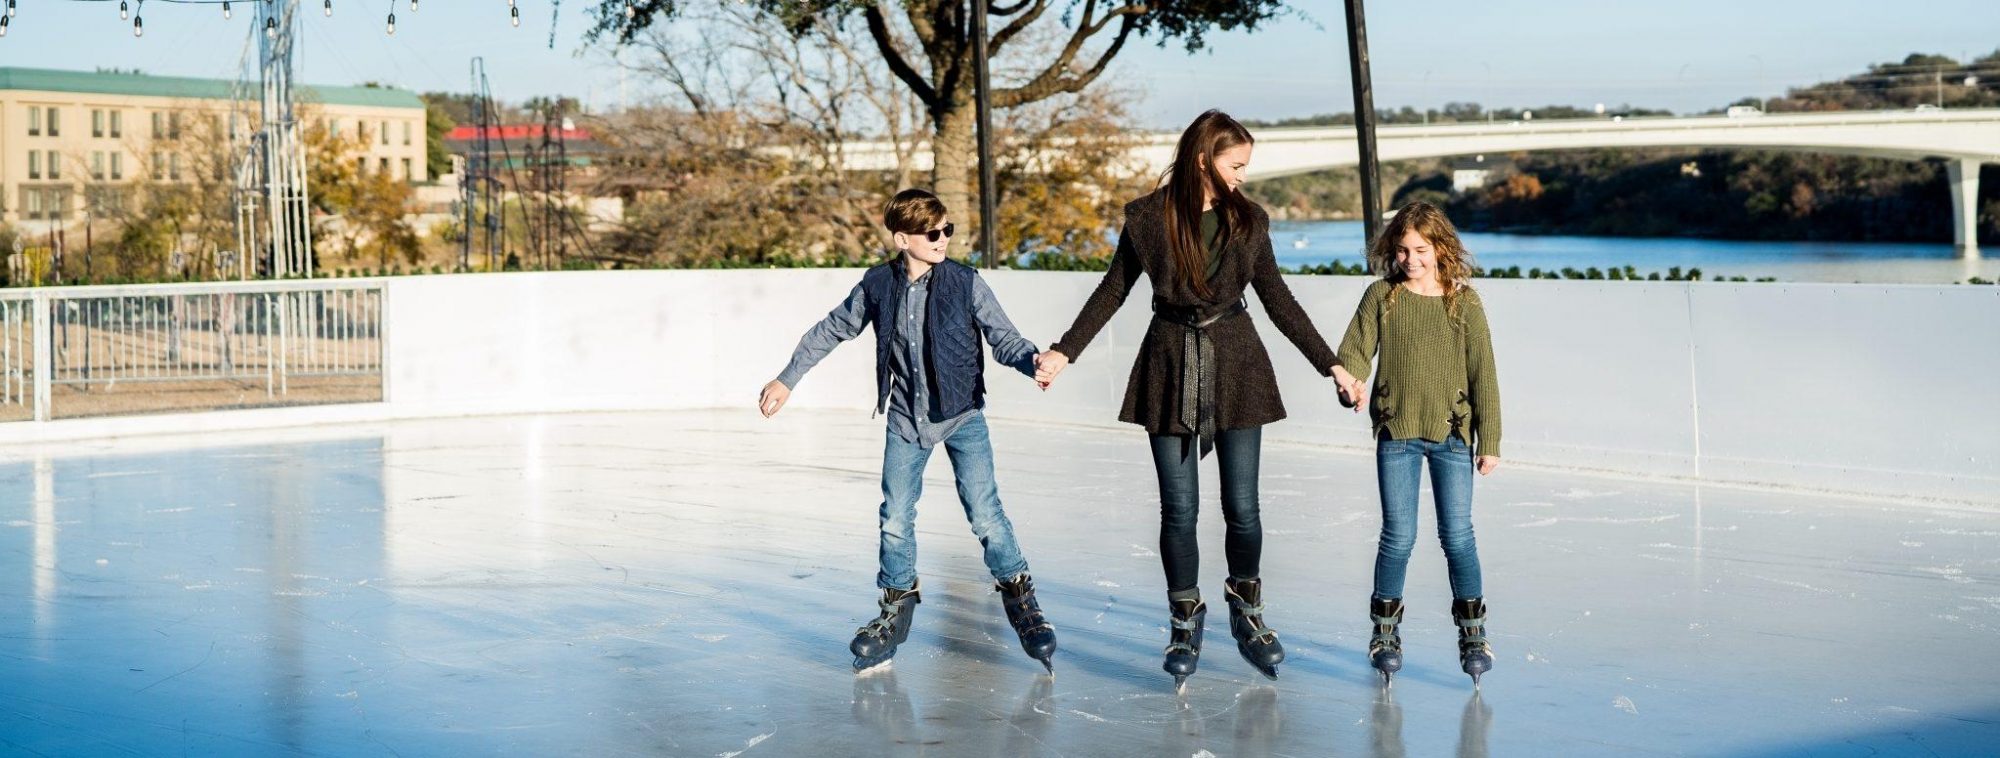 Ice Skating Rink Mother + Kids